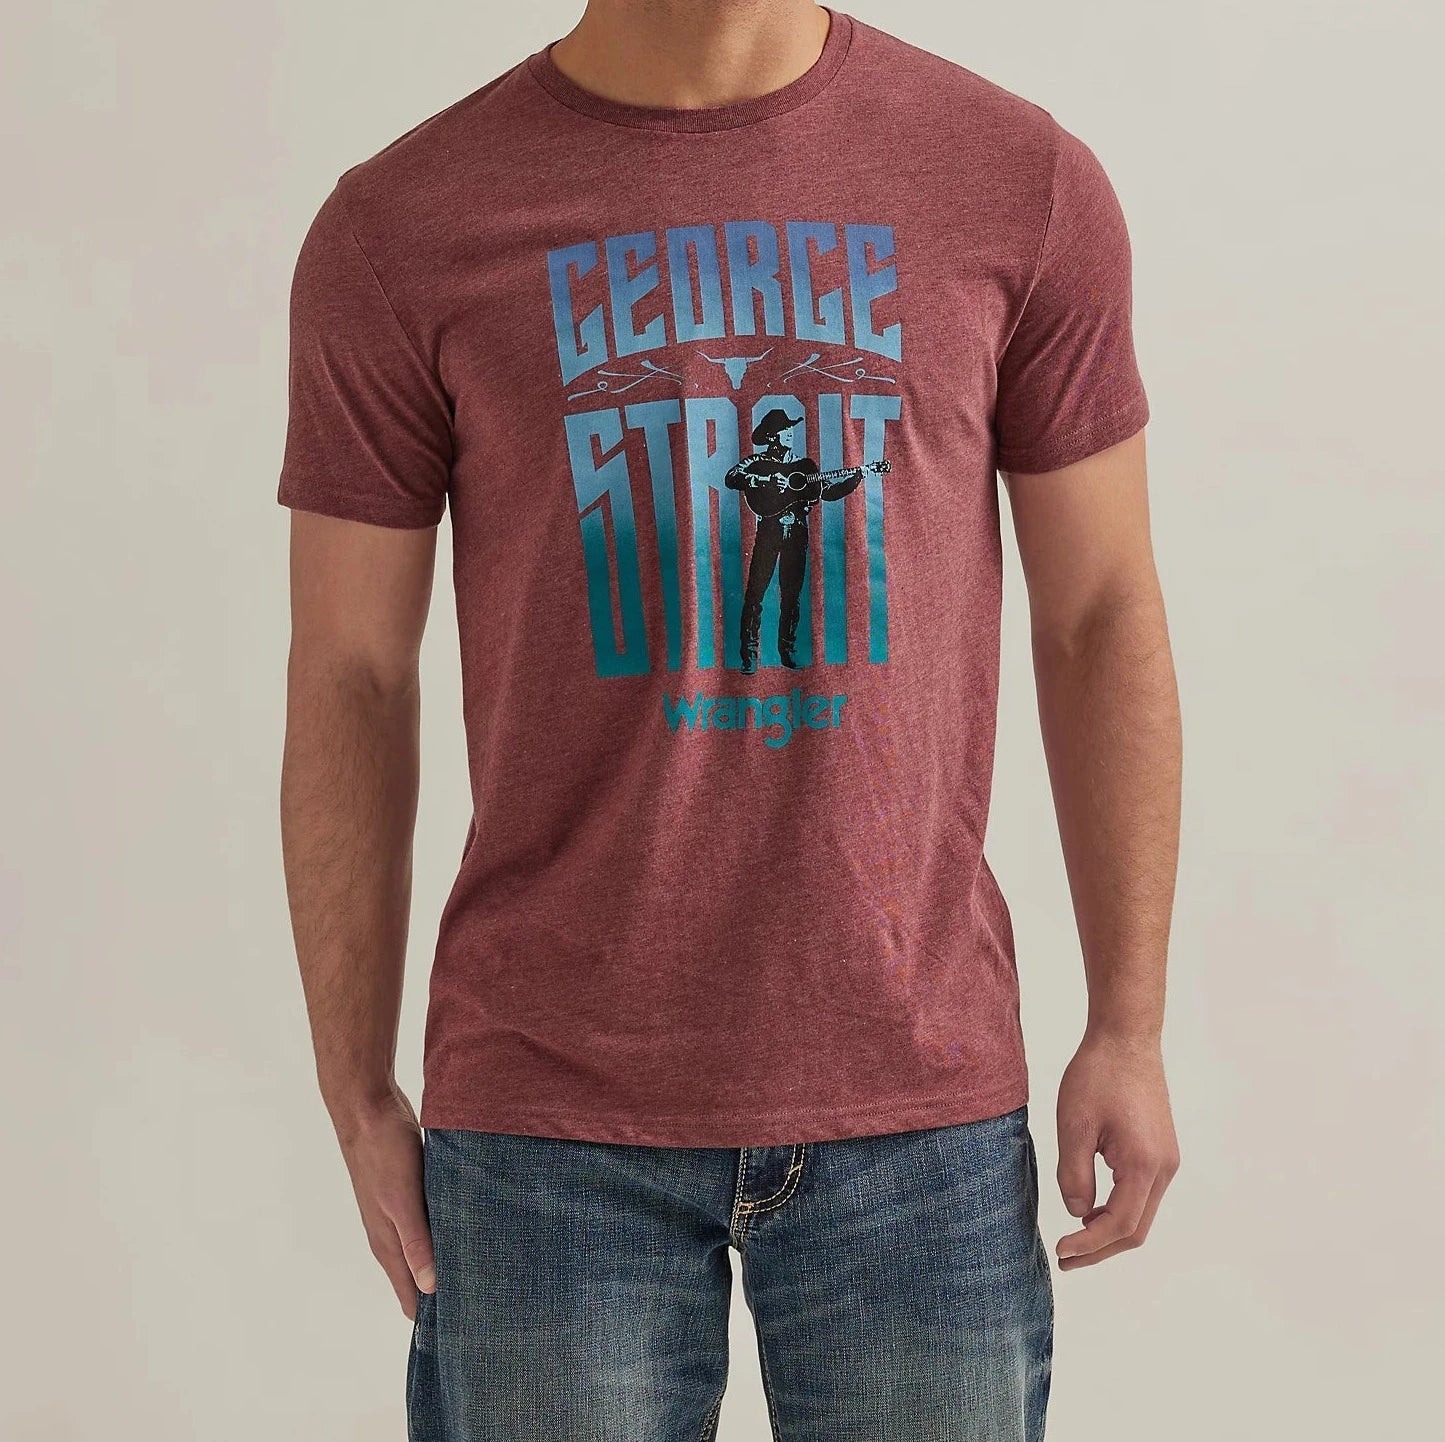 Wrangler George Strait Men's Short Sleeve Graphic T-Shirt STYLE 112344152